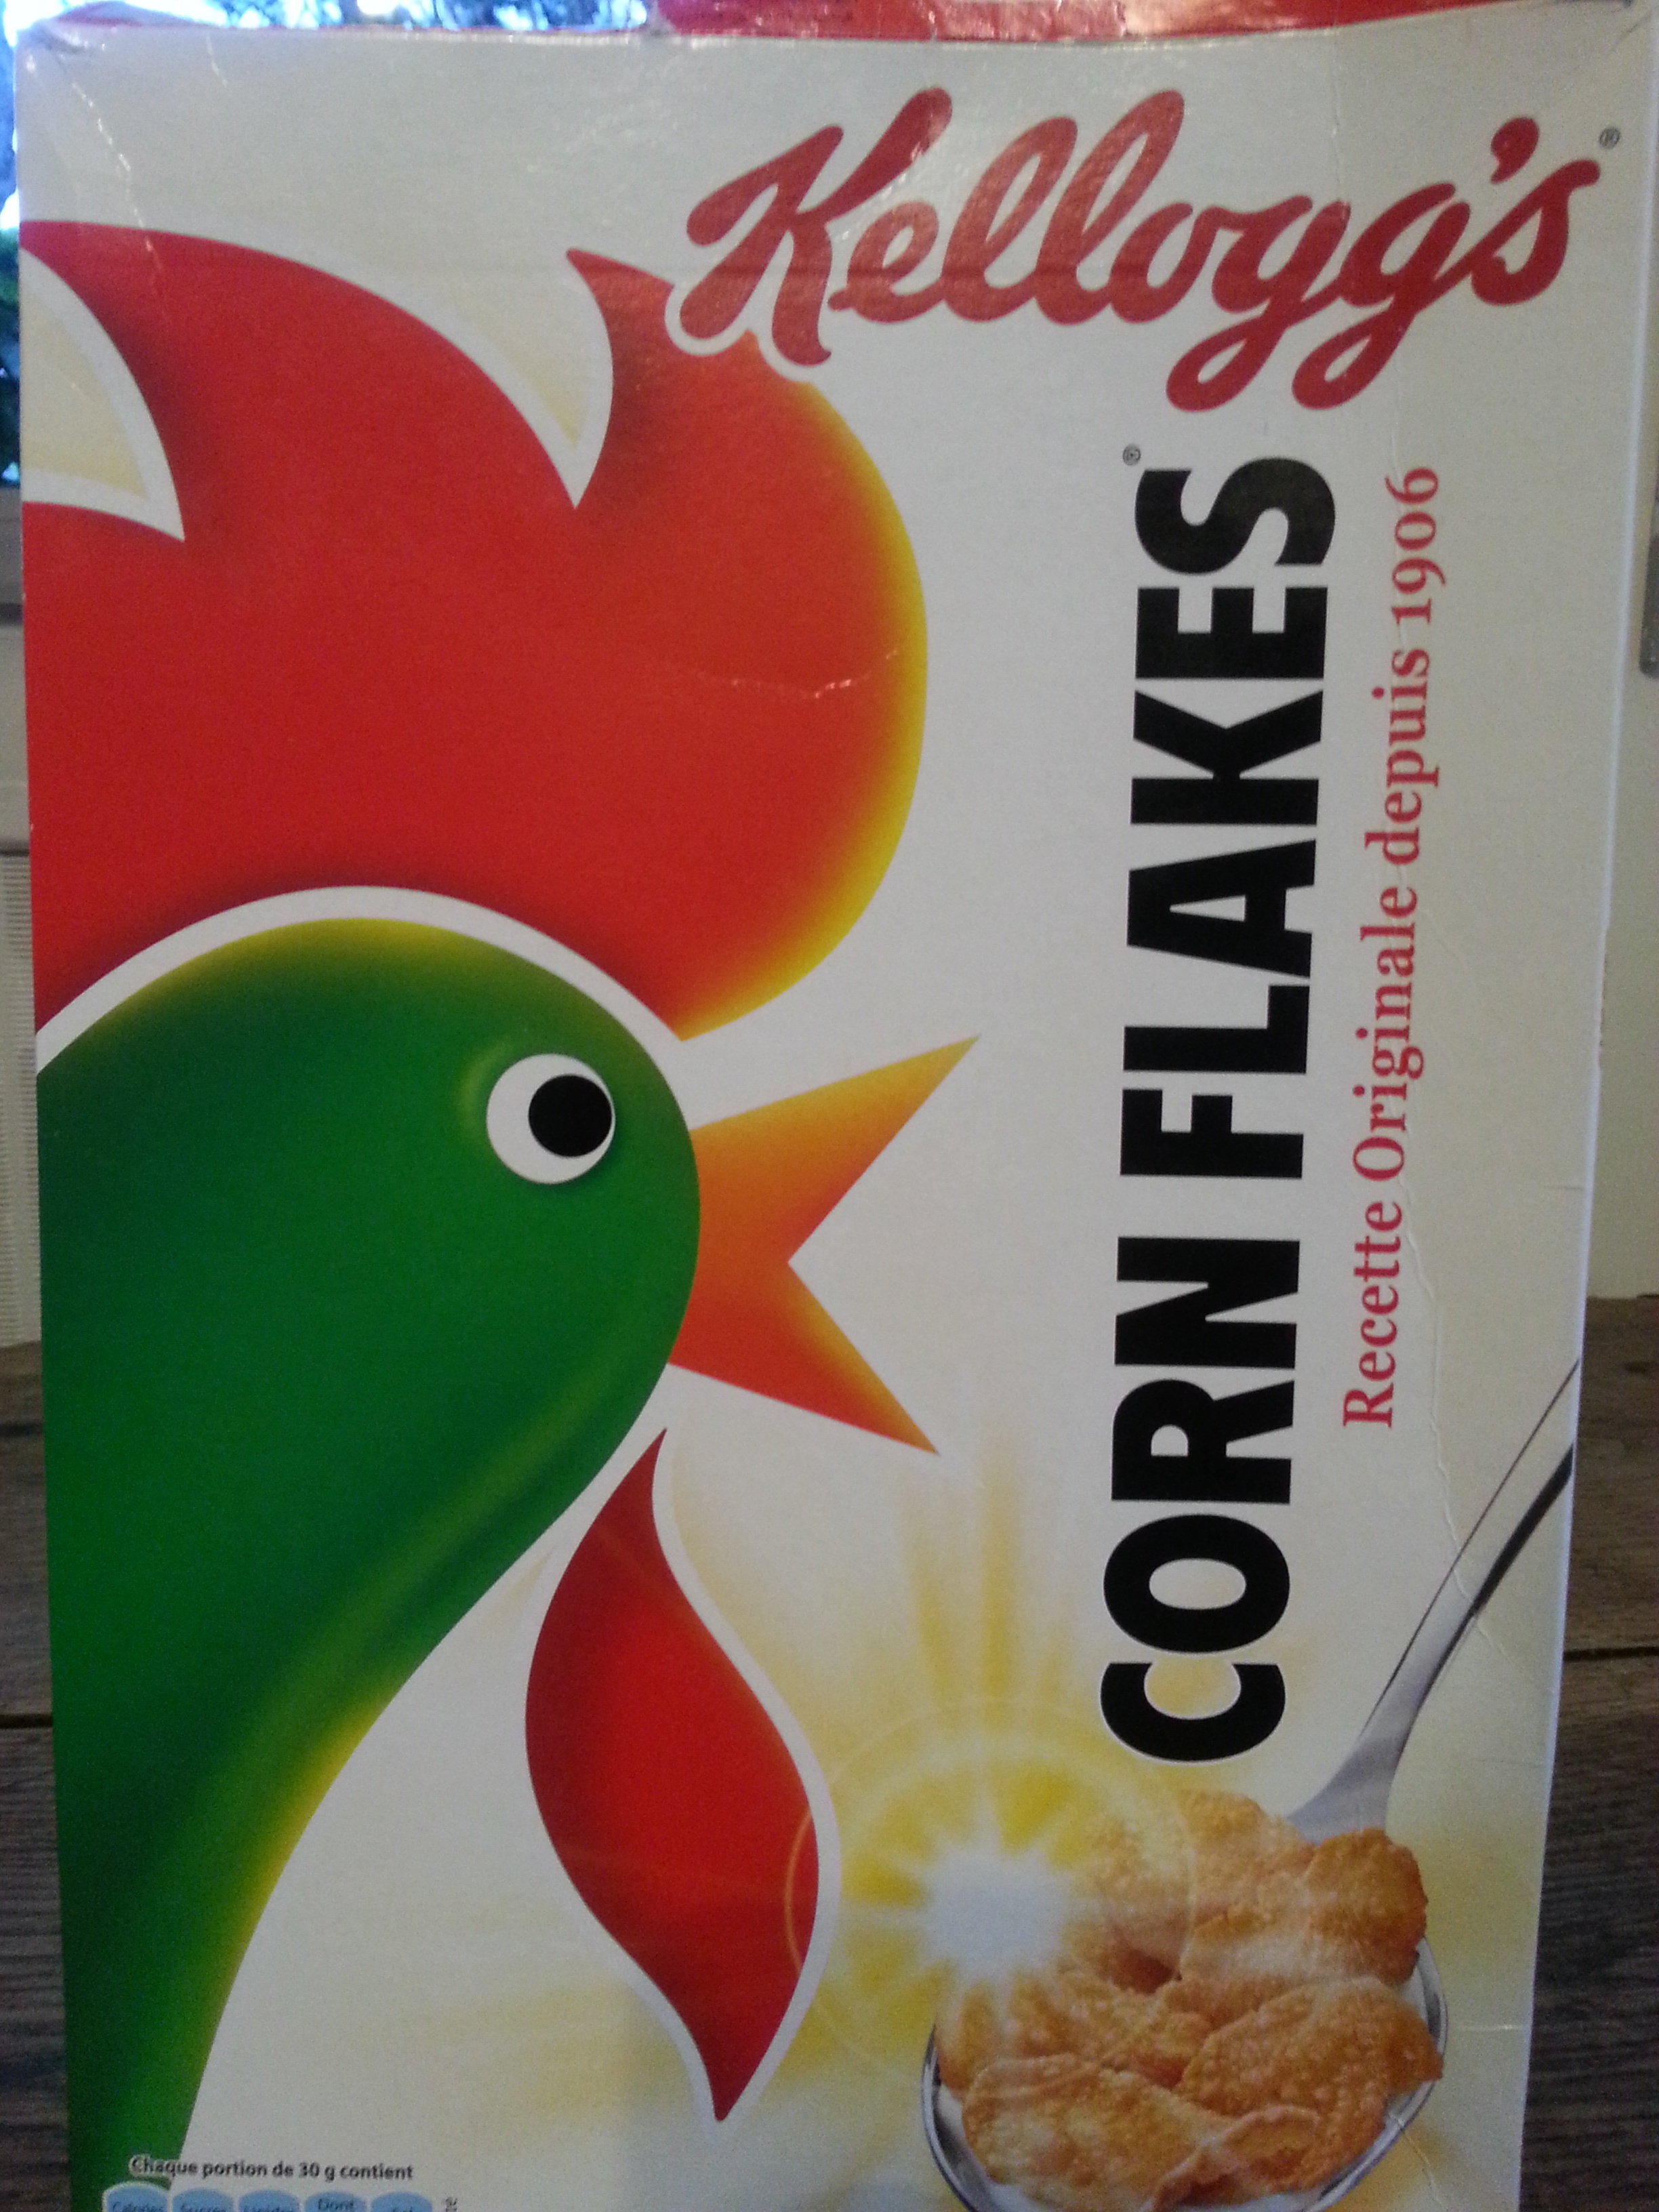 Corn Flakes - Produit